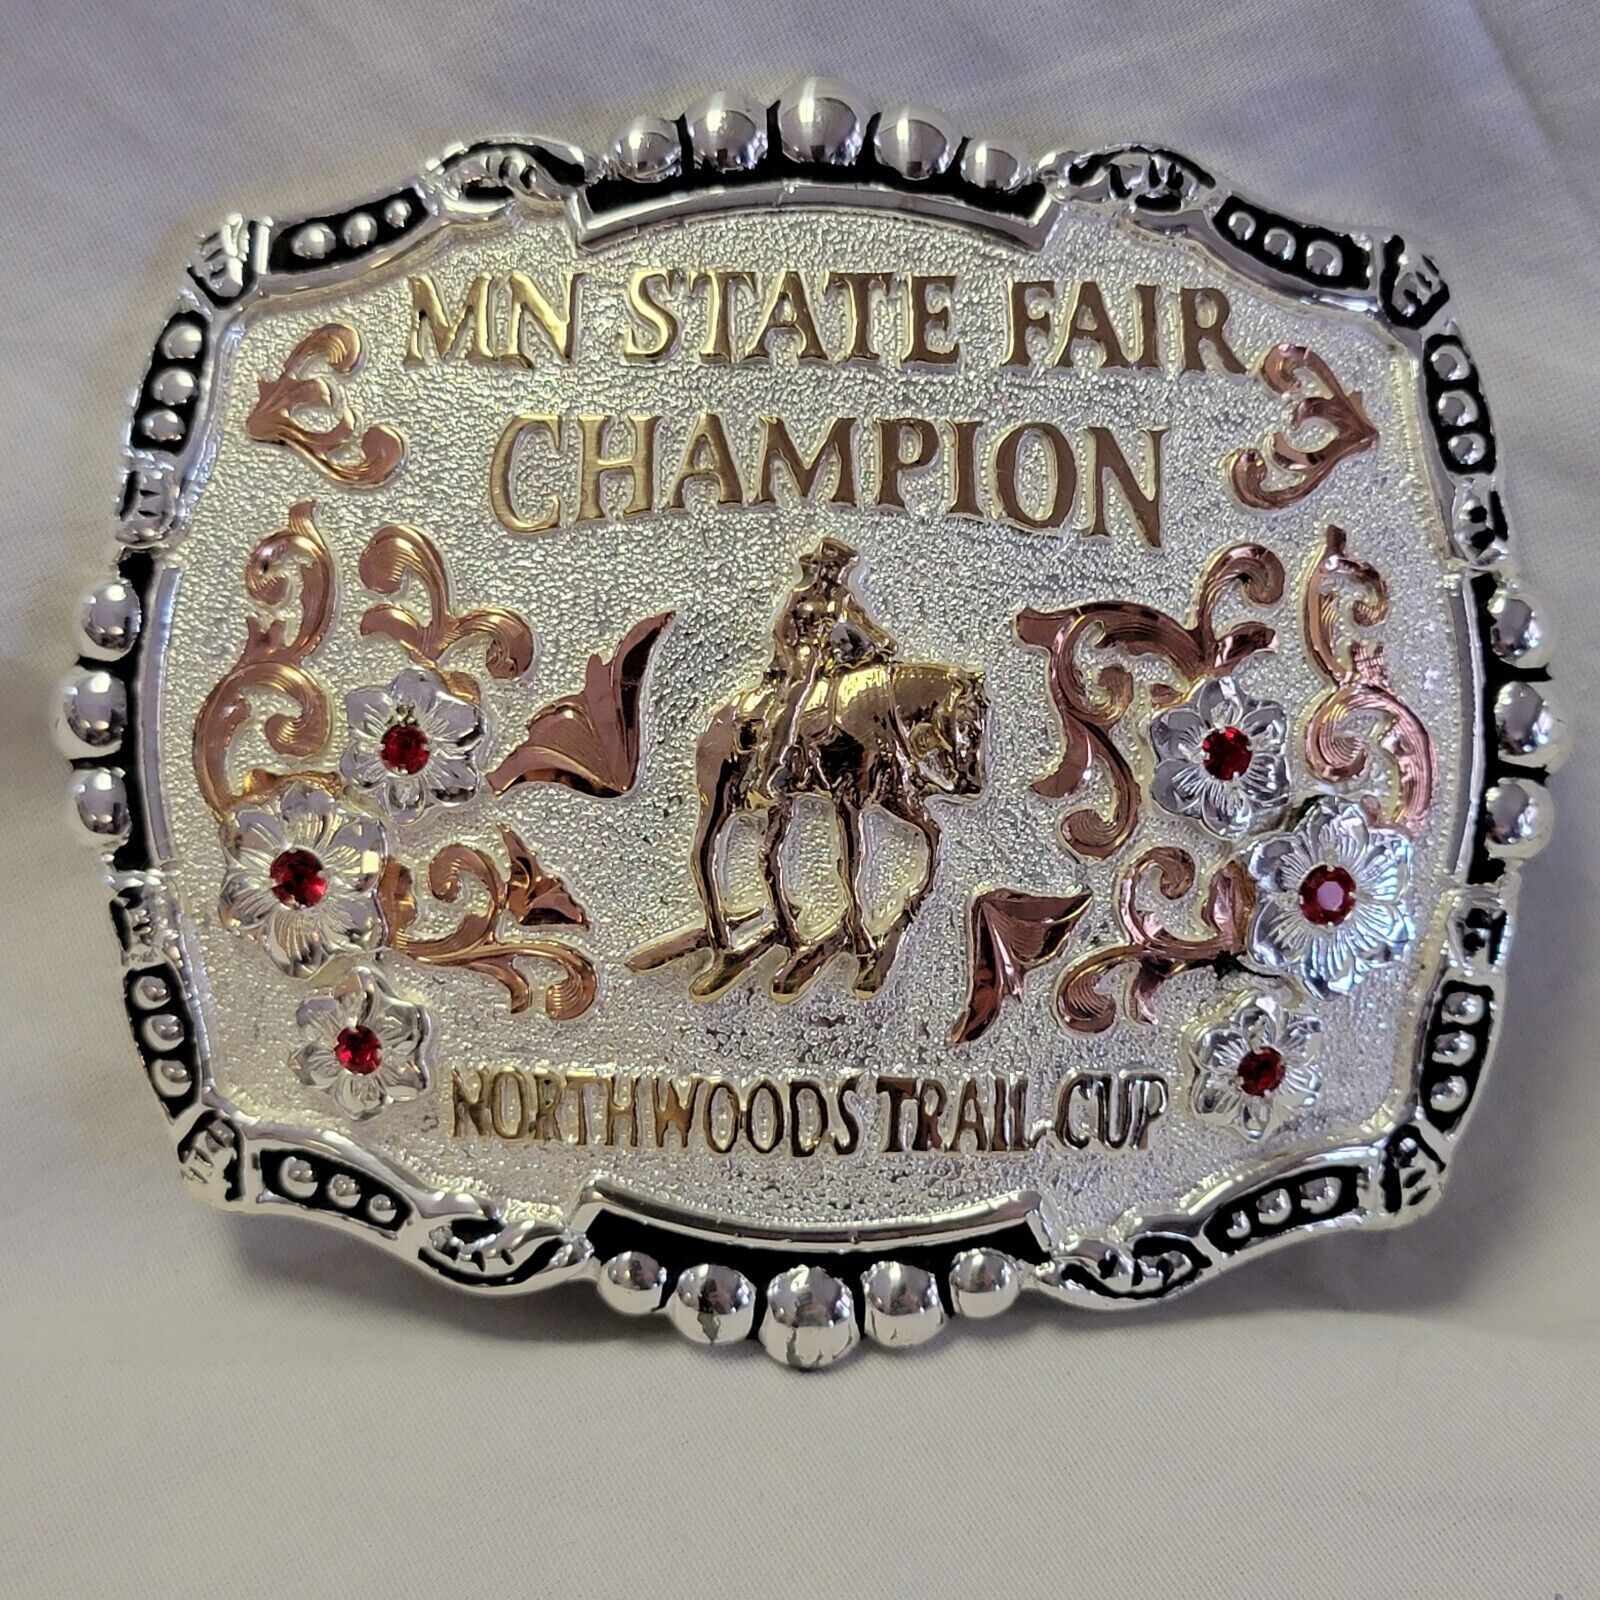 Minnesota State Fair Champion Belt Buckle Northwood Trail Cup